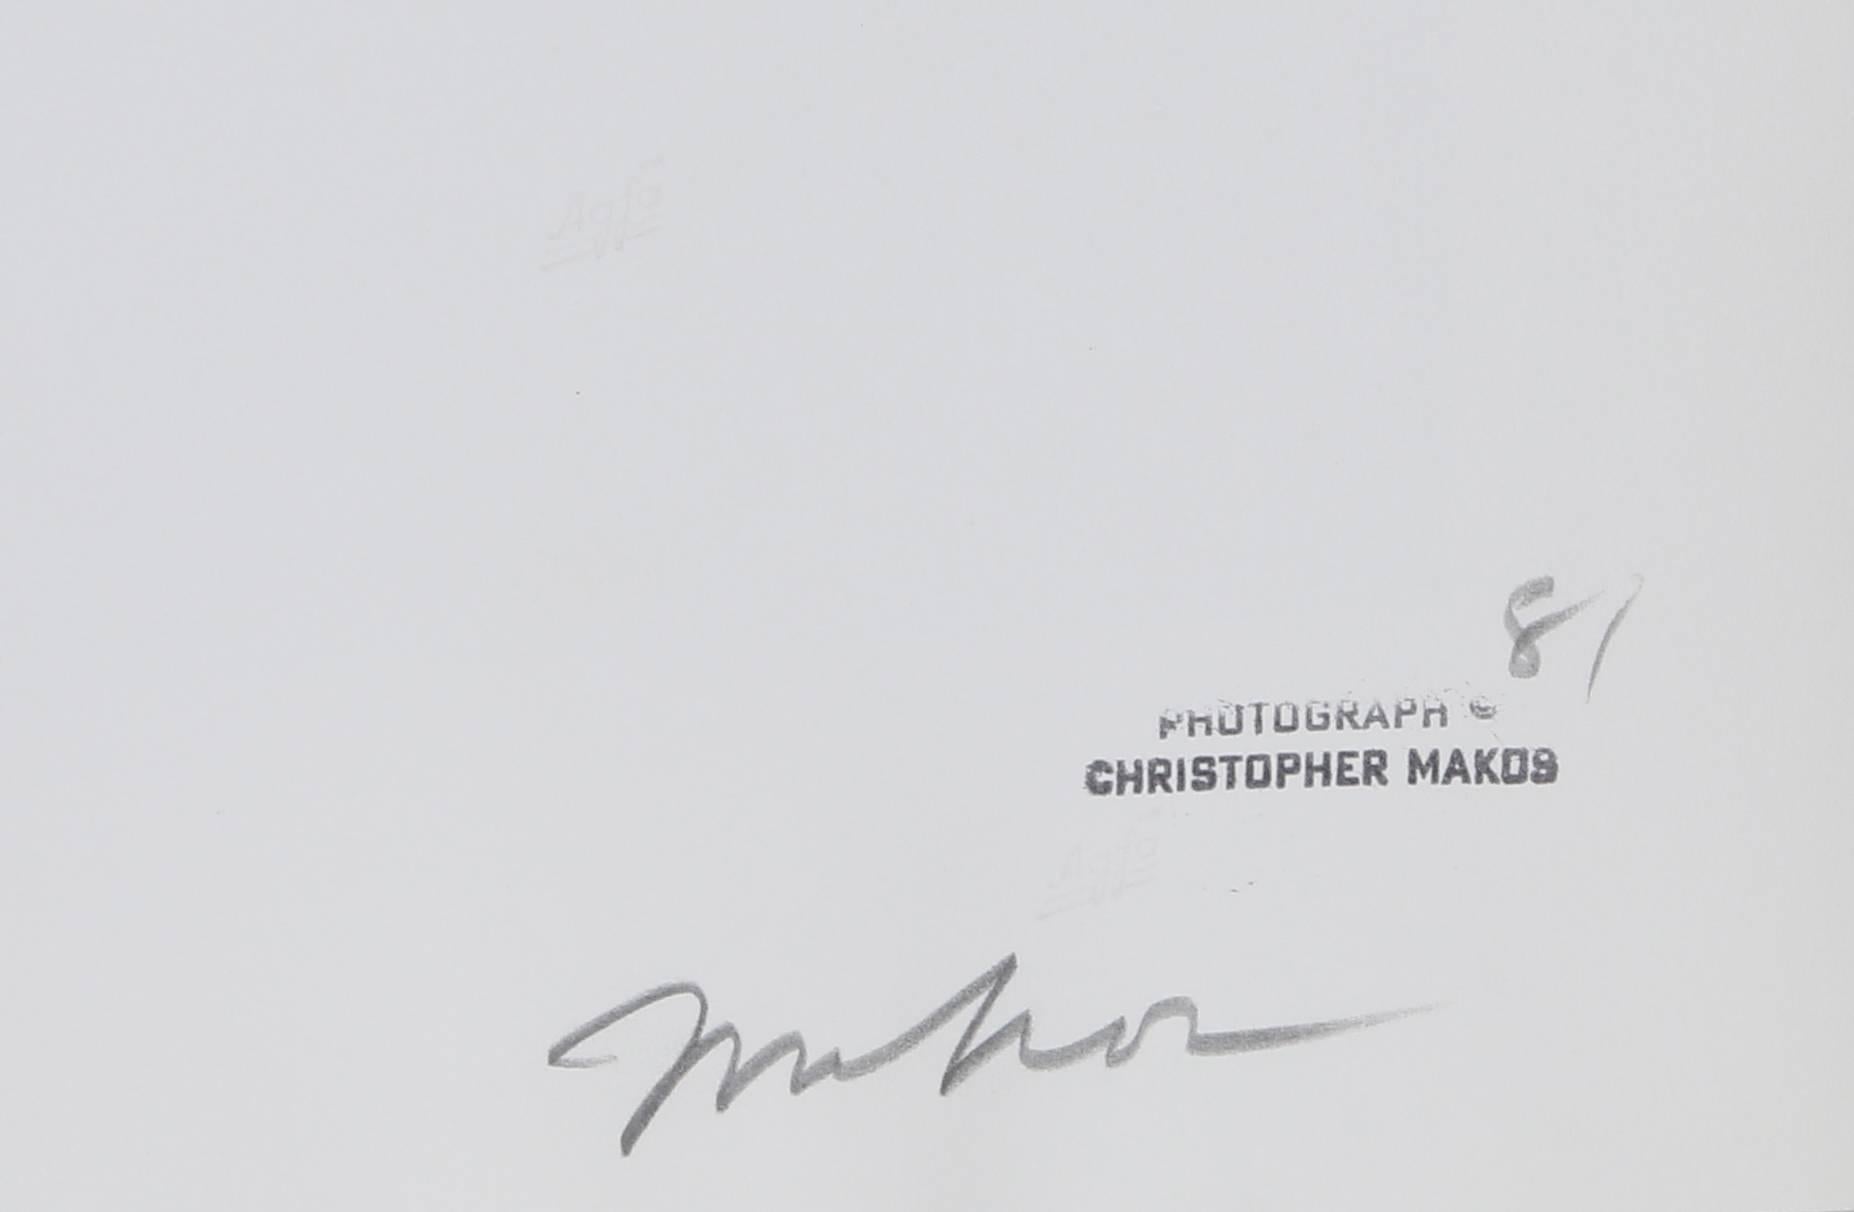 Andy Warhol à Paris - Photograph de Christopher Makos